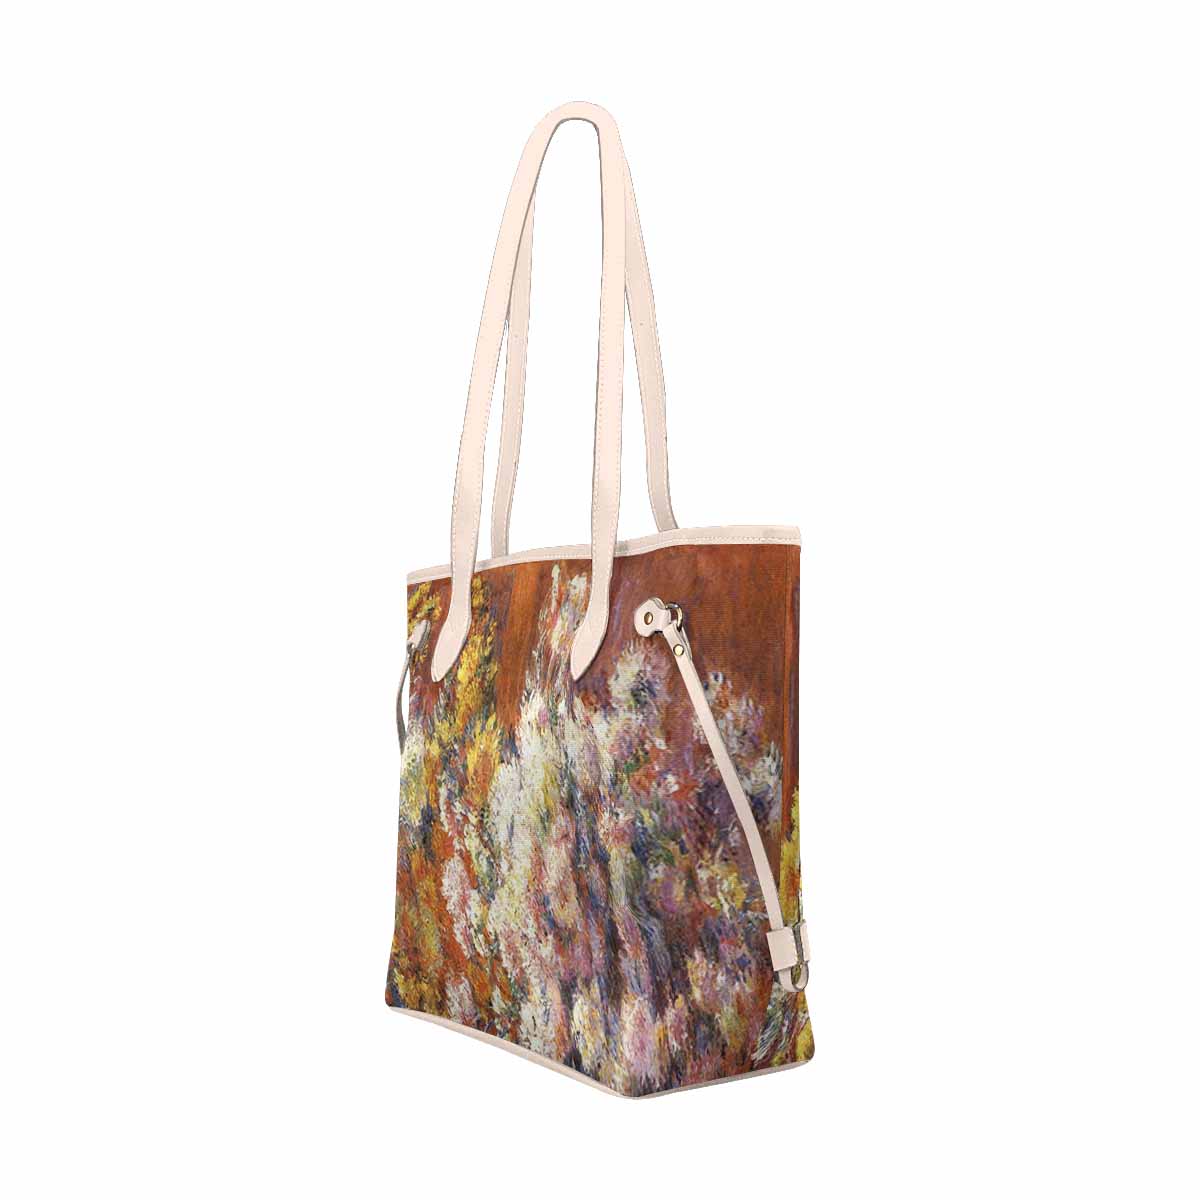 Vintage Floral Handbag, Classic Handbag, Mod 1695361 Design 57, BEIGE/TAN TRIM